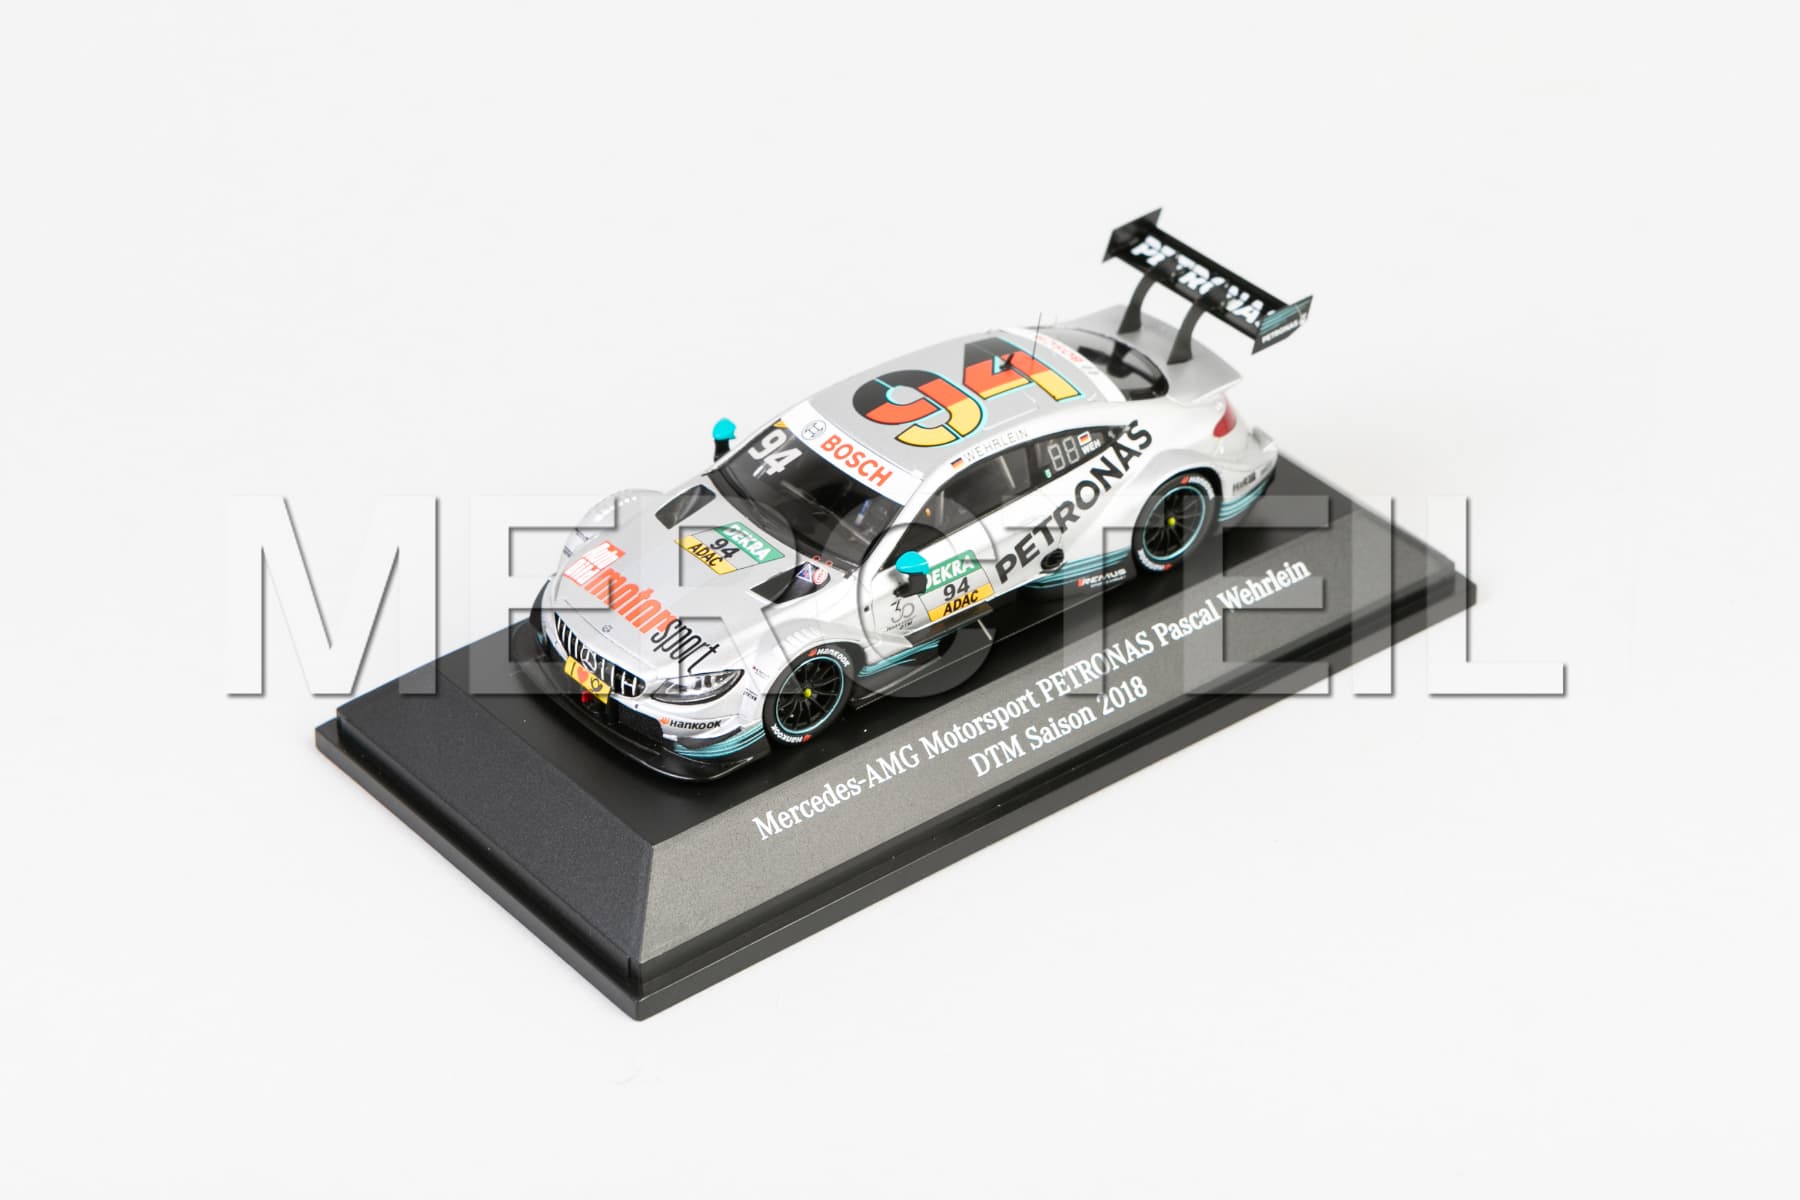 AMG DTM Motorsport Silver Arrow Team Petronas 1:43 Scale Genuine Mercedes-AMG by Minimax B66960476